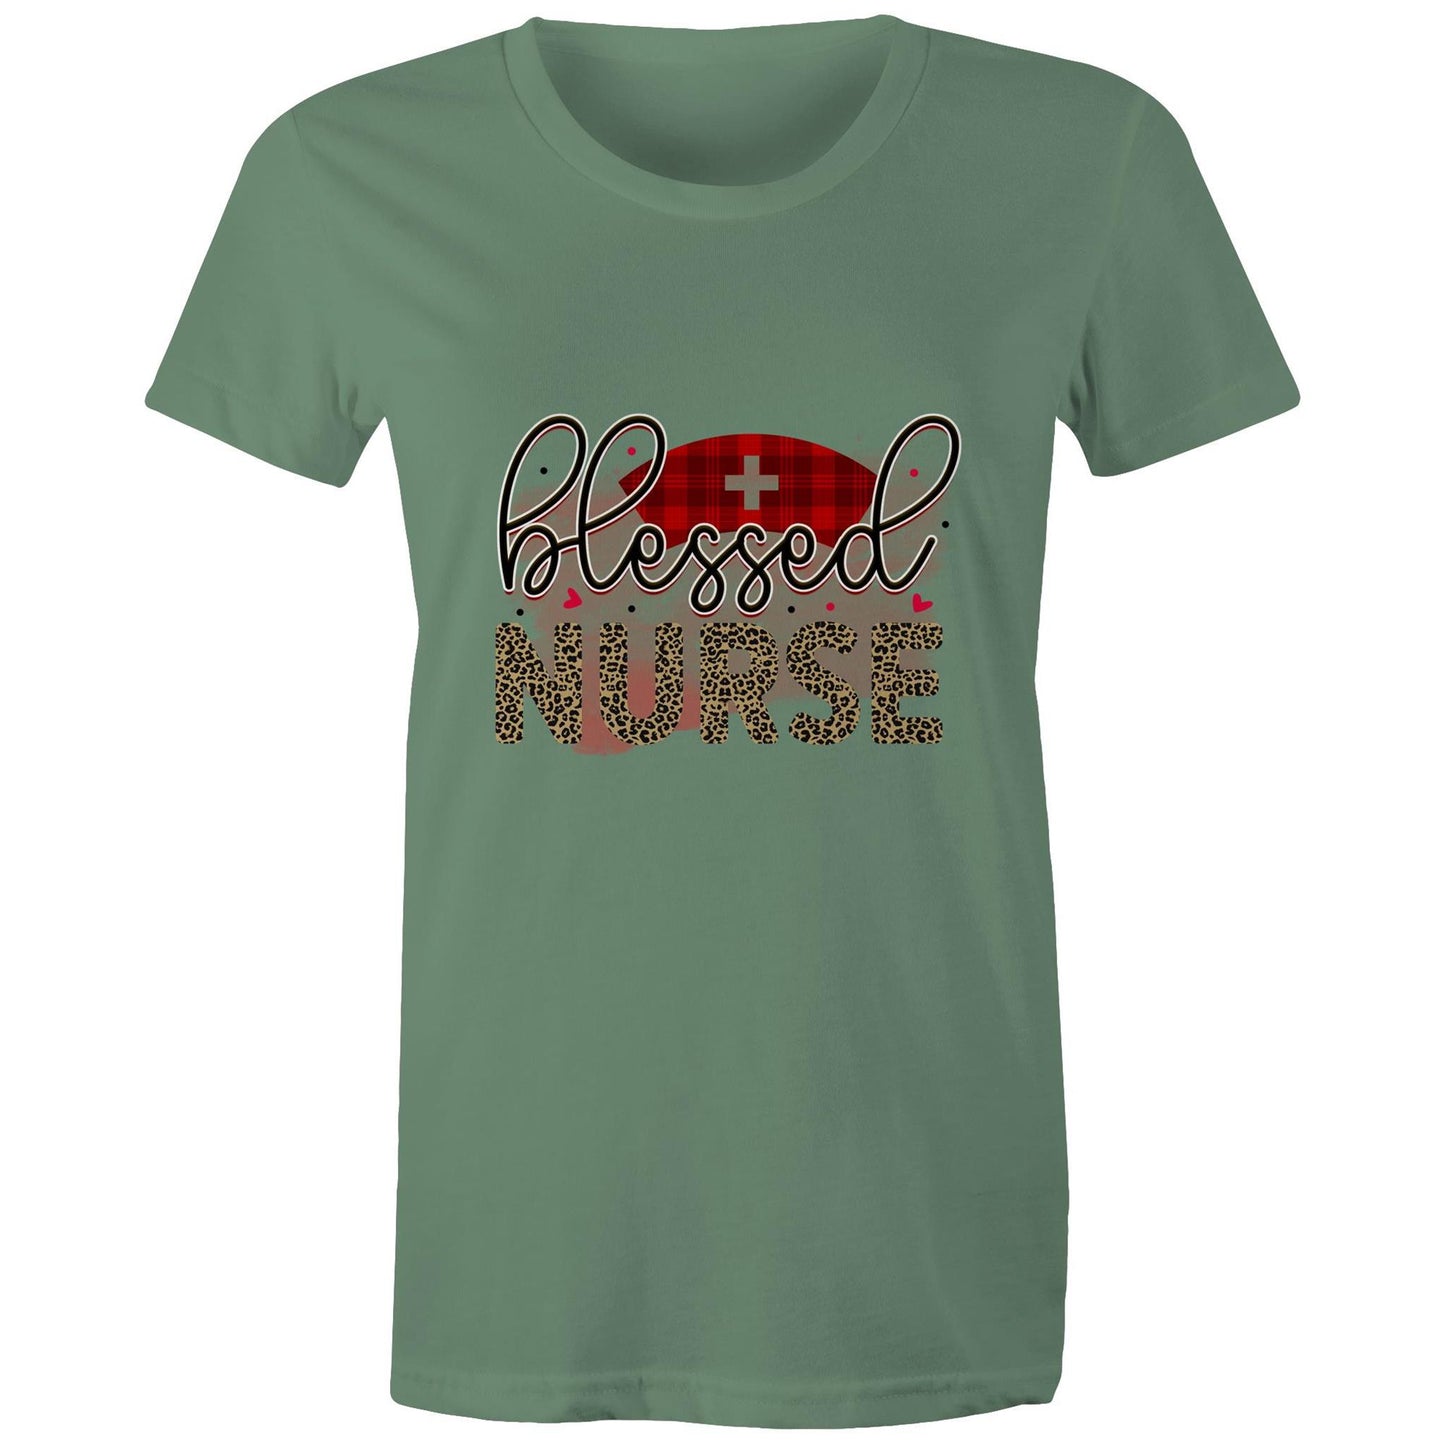 Blessed Nurse Women's Maple Tee